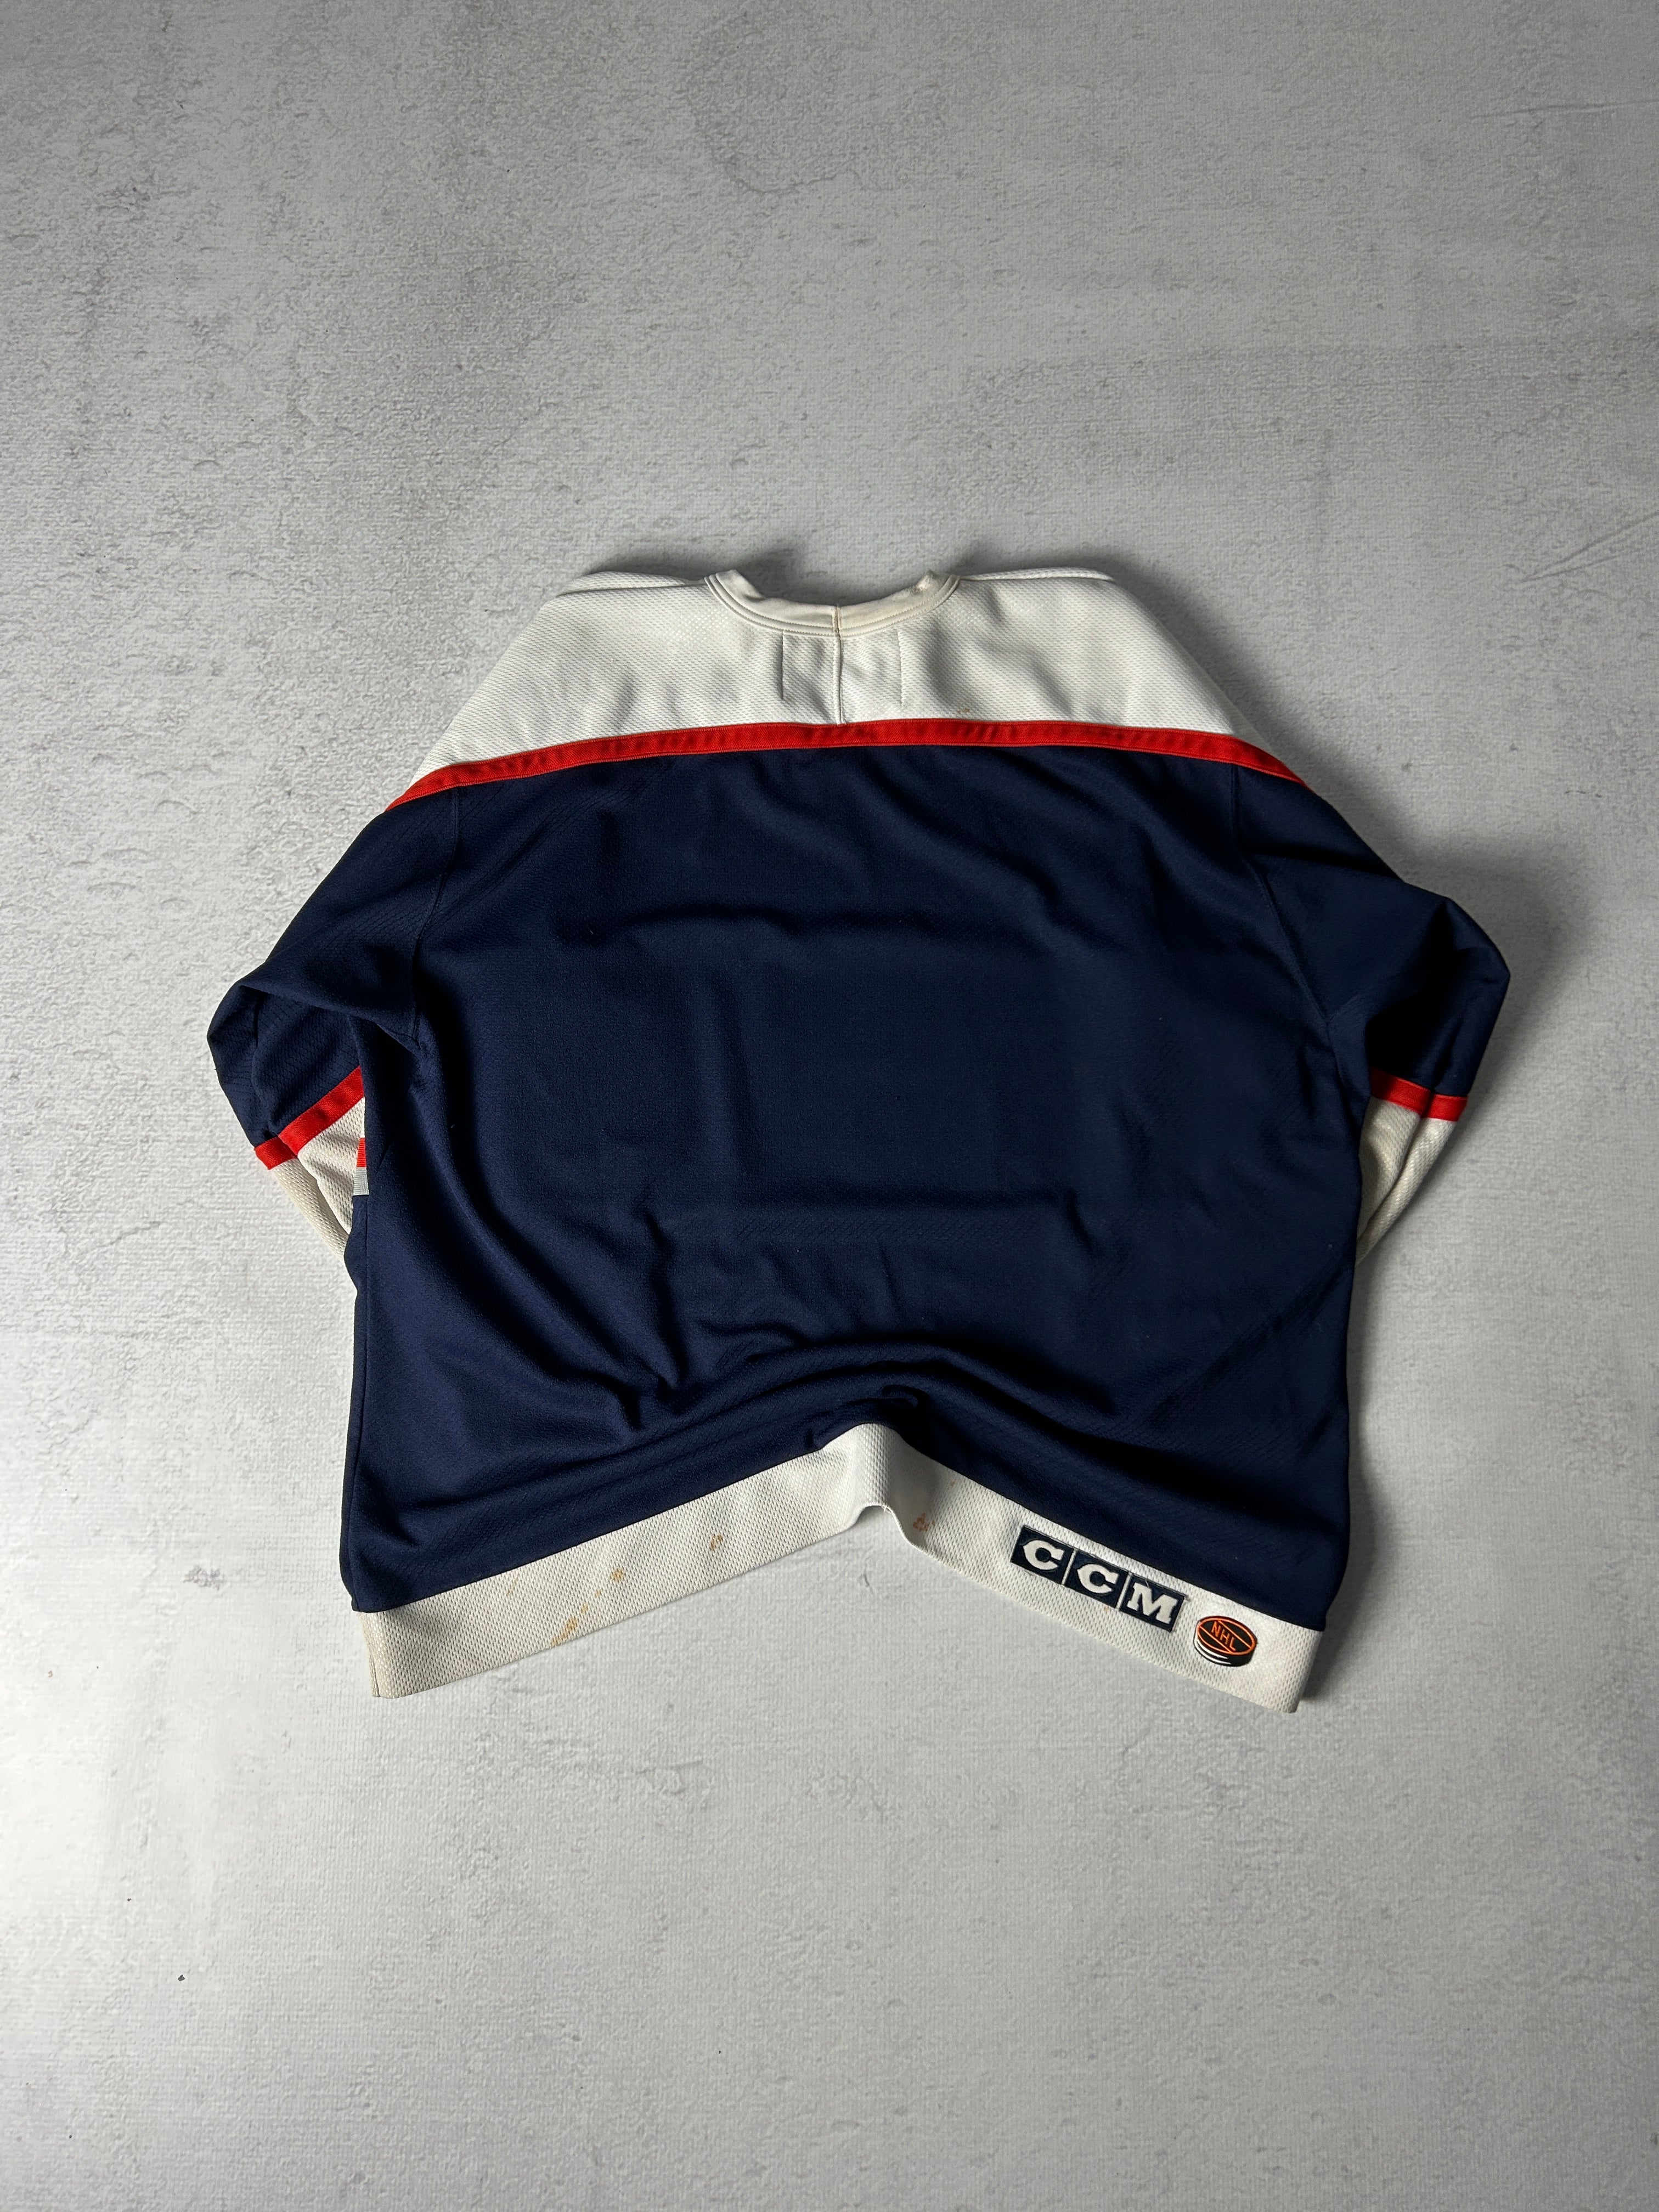 Vintage NHL 2000 All Star Jersey - Men's XL